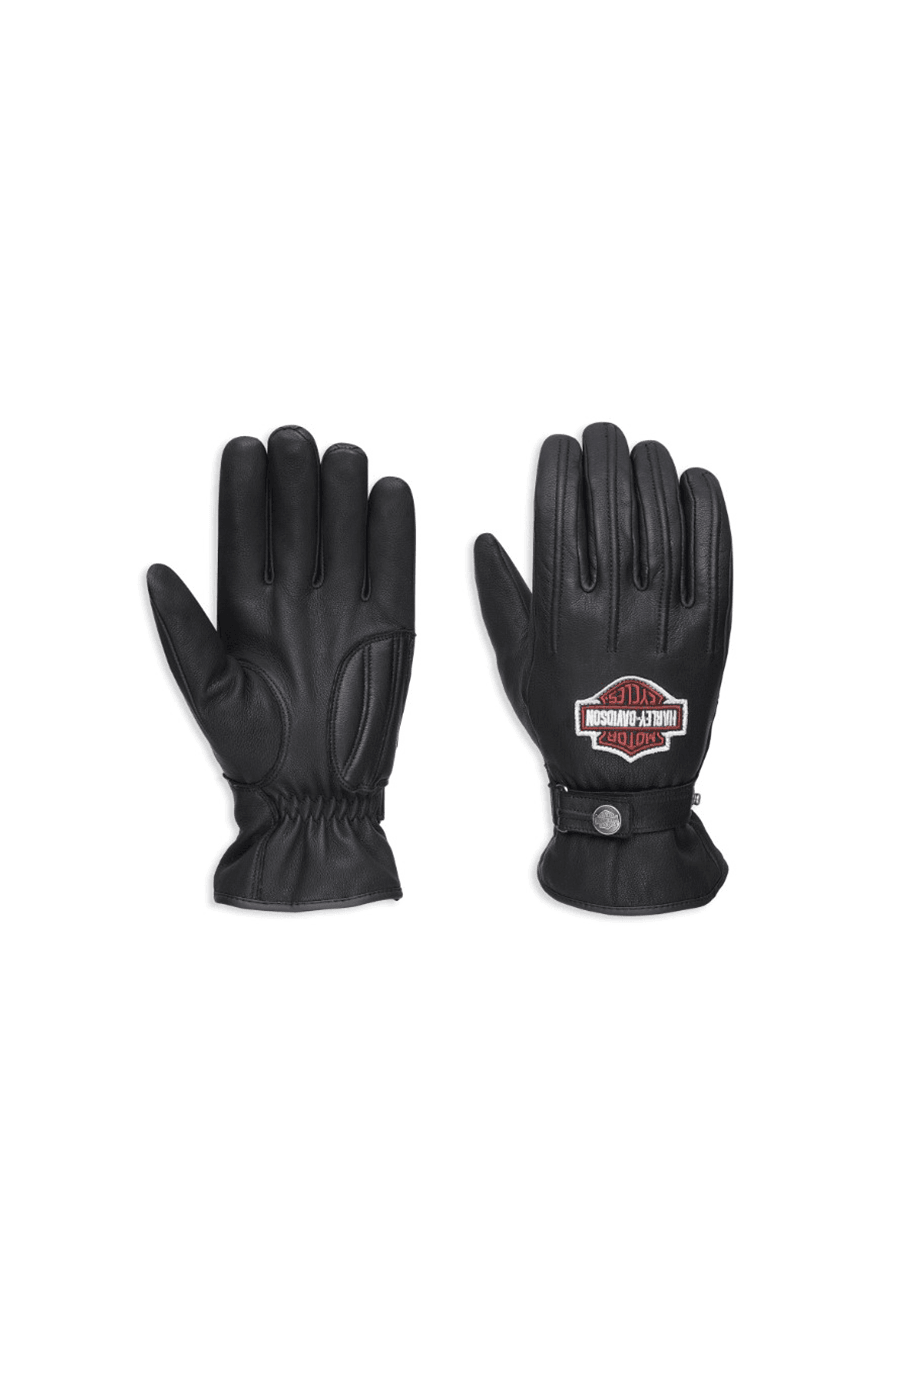 Harley-Davidson® Men's Enthusiast Leather Gloves